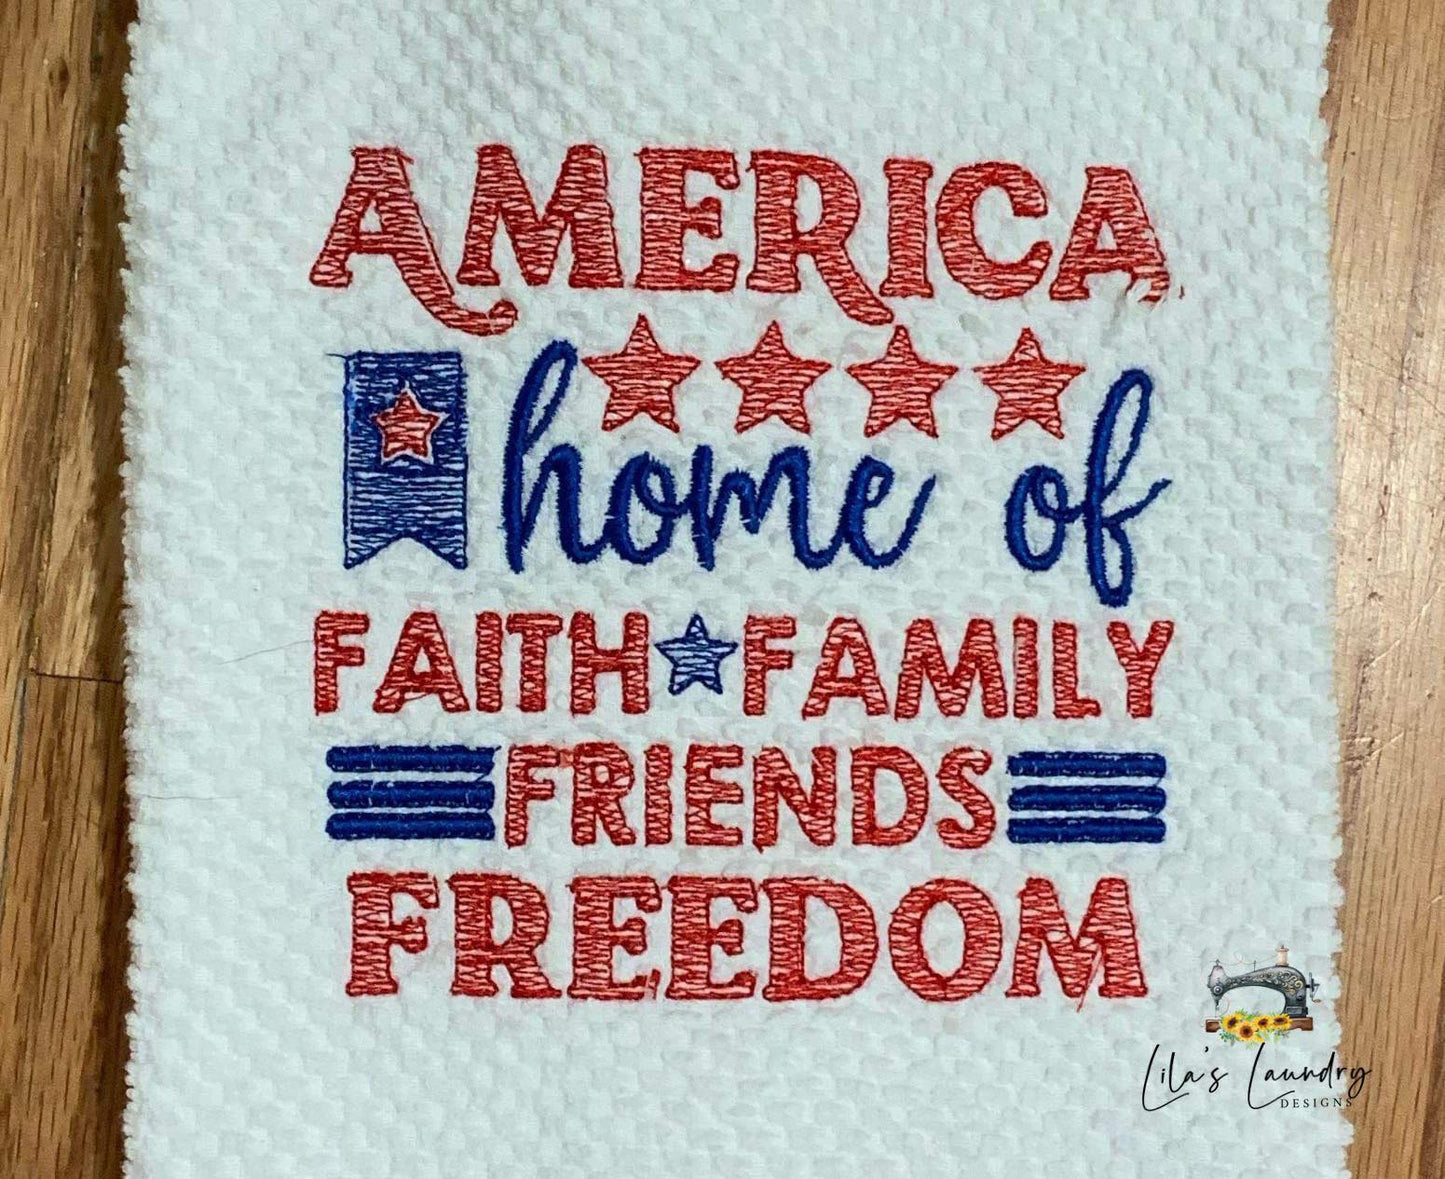 Faith Family Friends Freedom - 4 sizes- Digital Embroidery Design